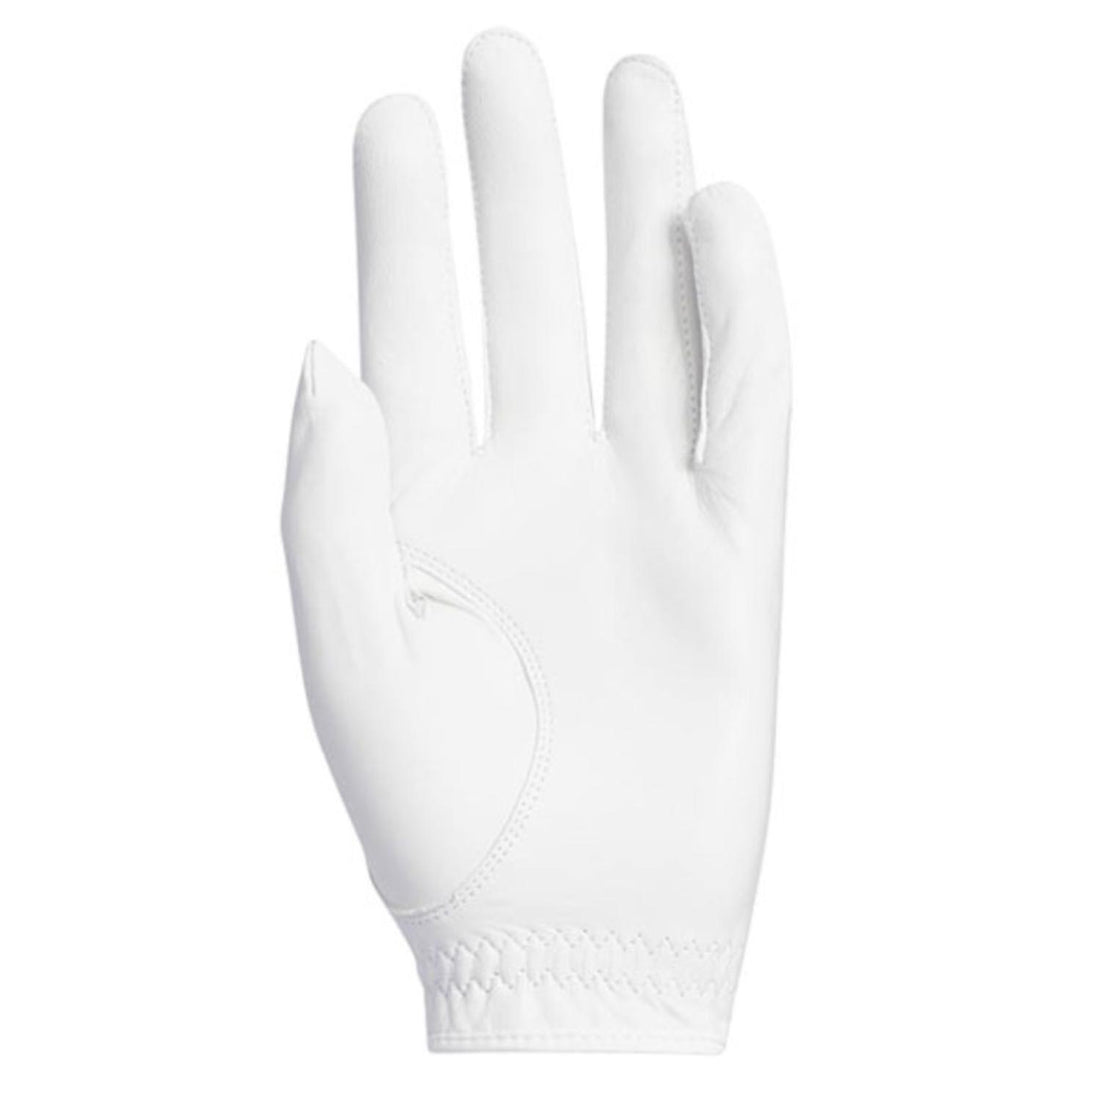 Adidas Golf Leather Glove